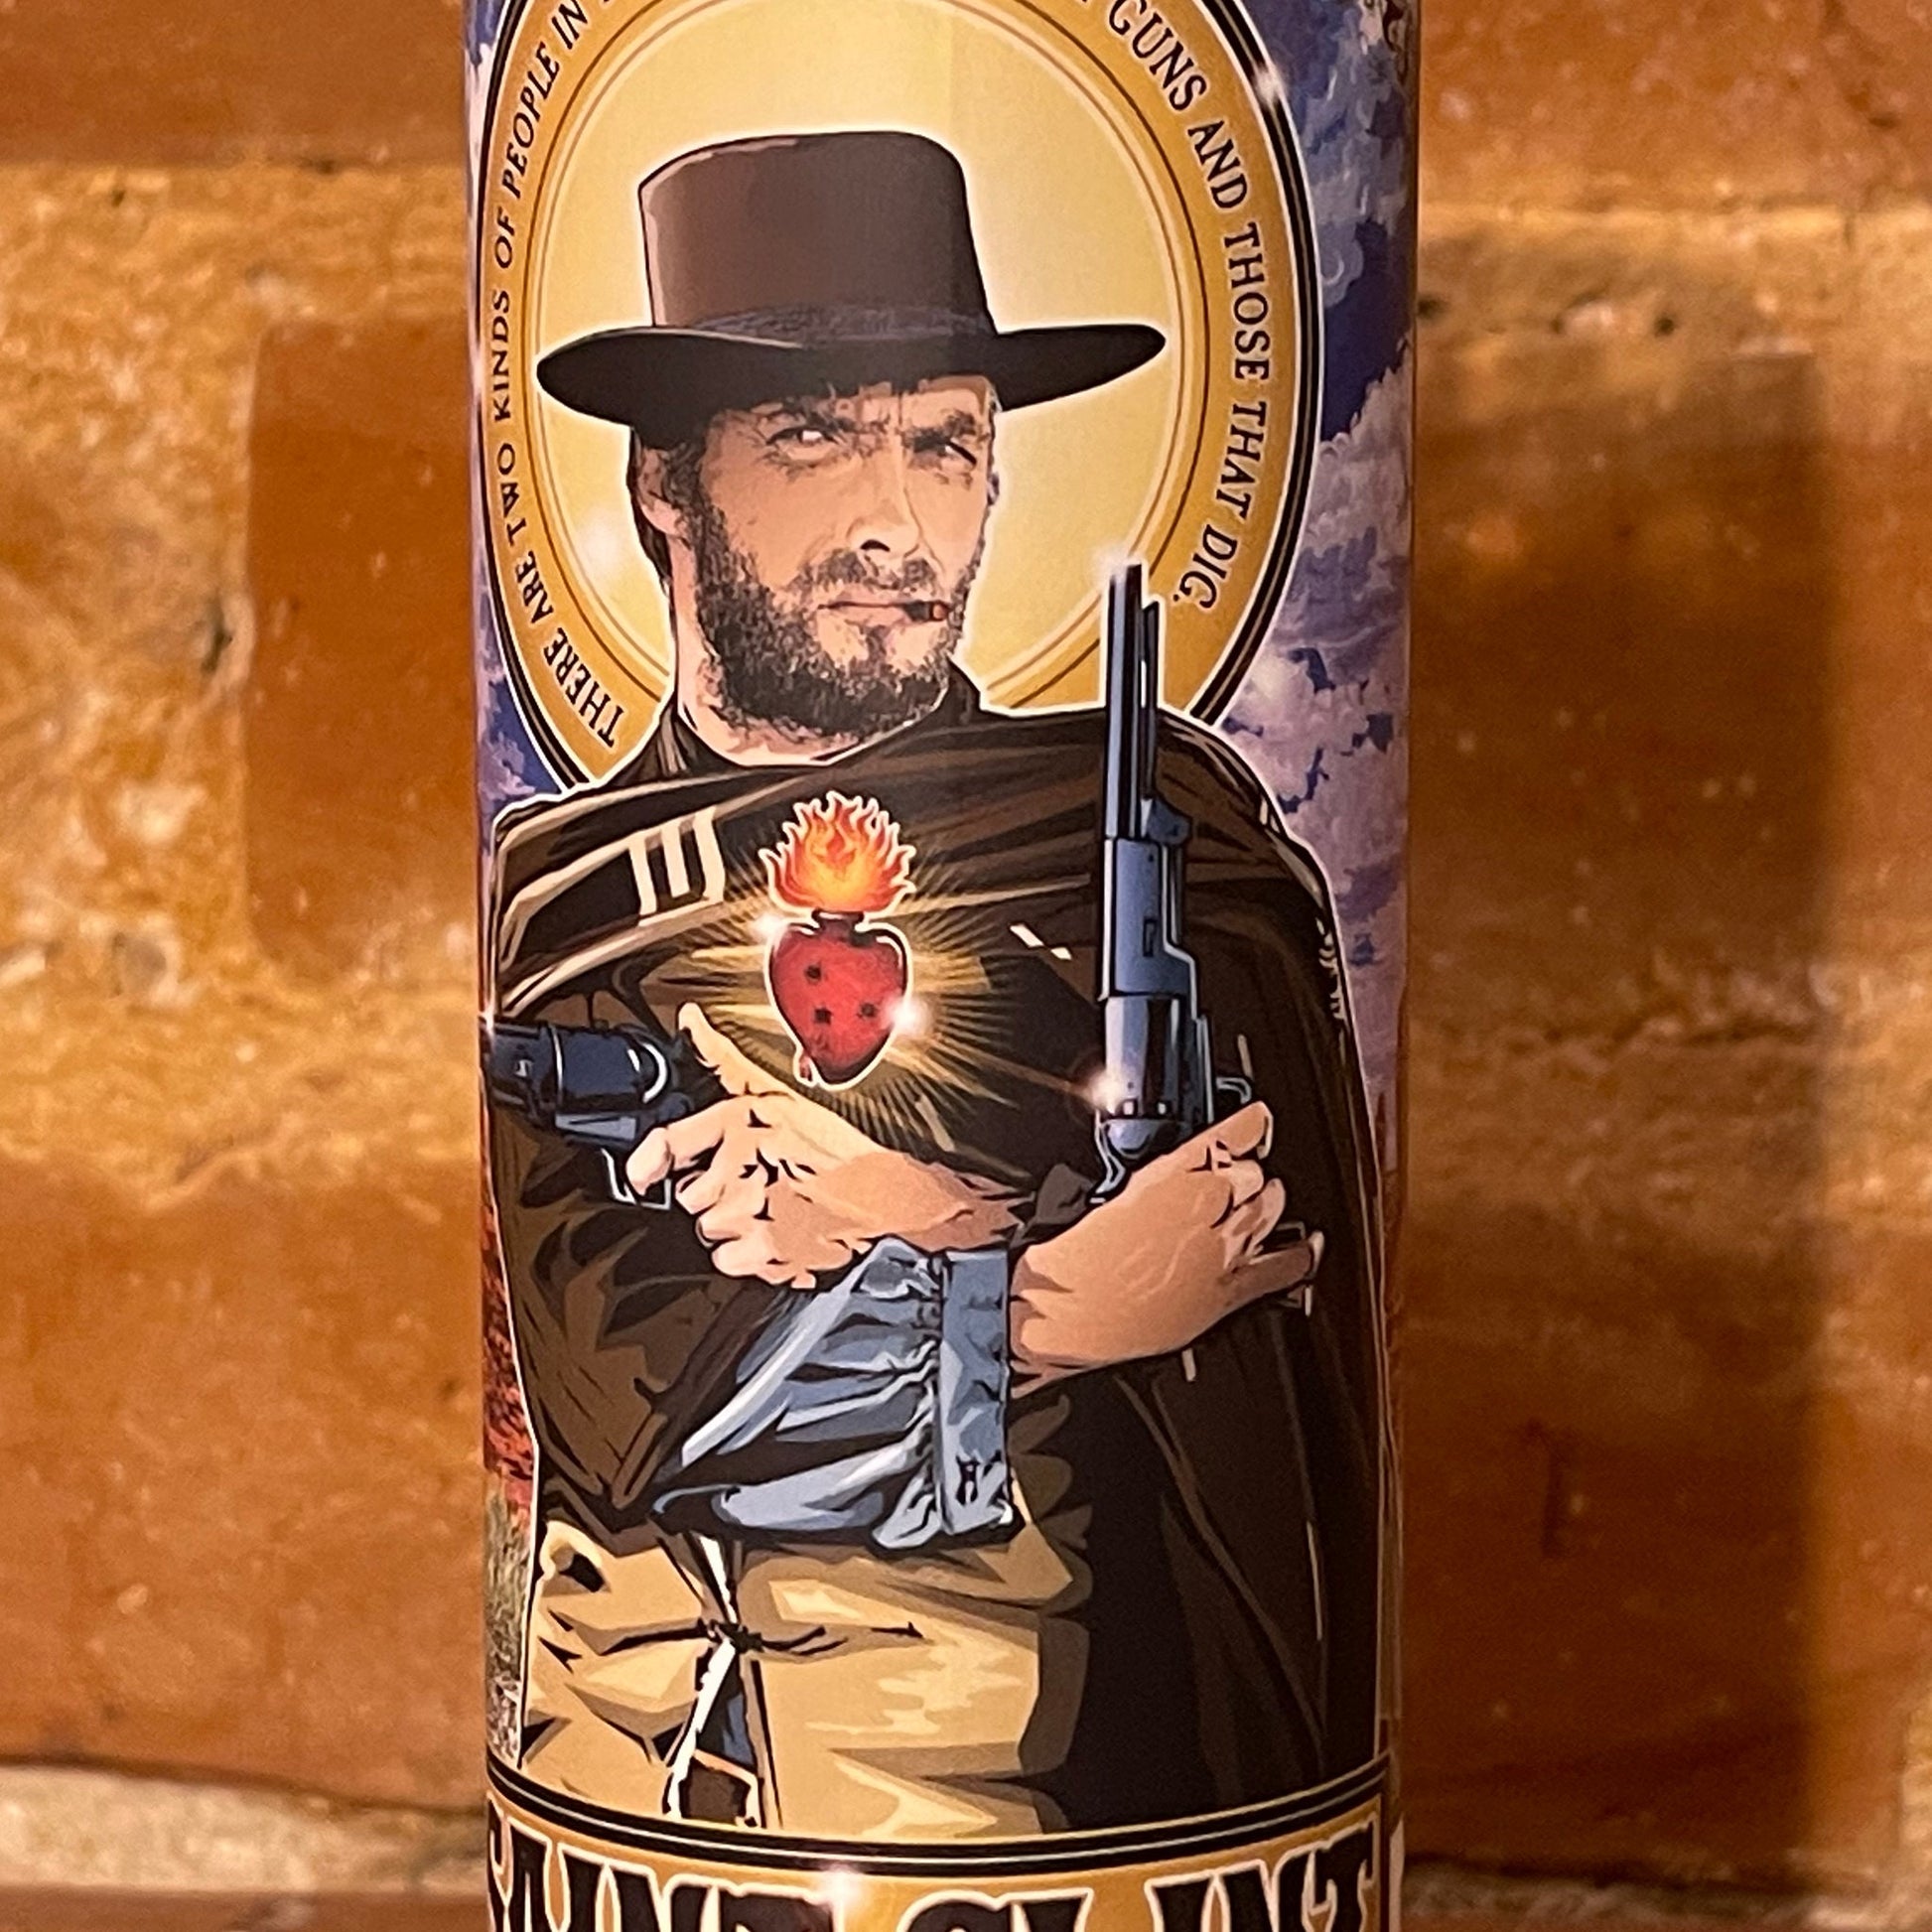 Saint Clint Man With No Name Candle Cleaverandblade.com